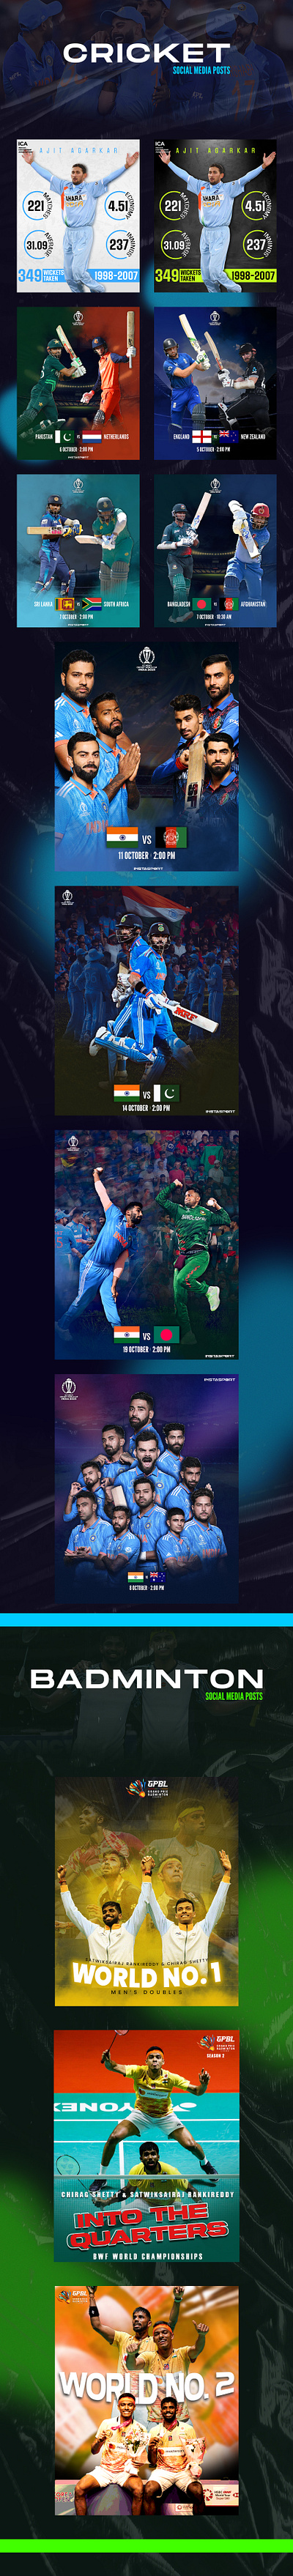 Social Media Posts - Cricket & Badminton badminton cricket graphic design social social media social media post